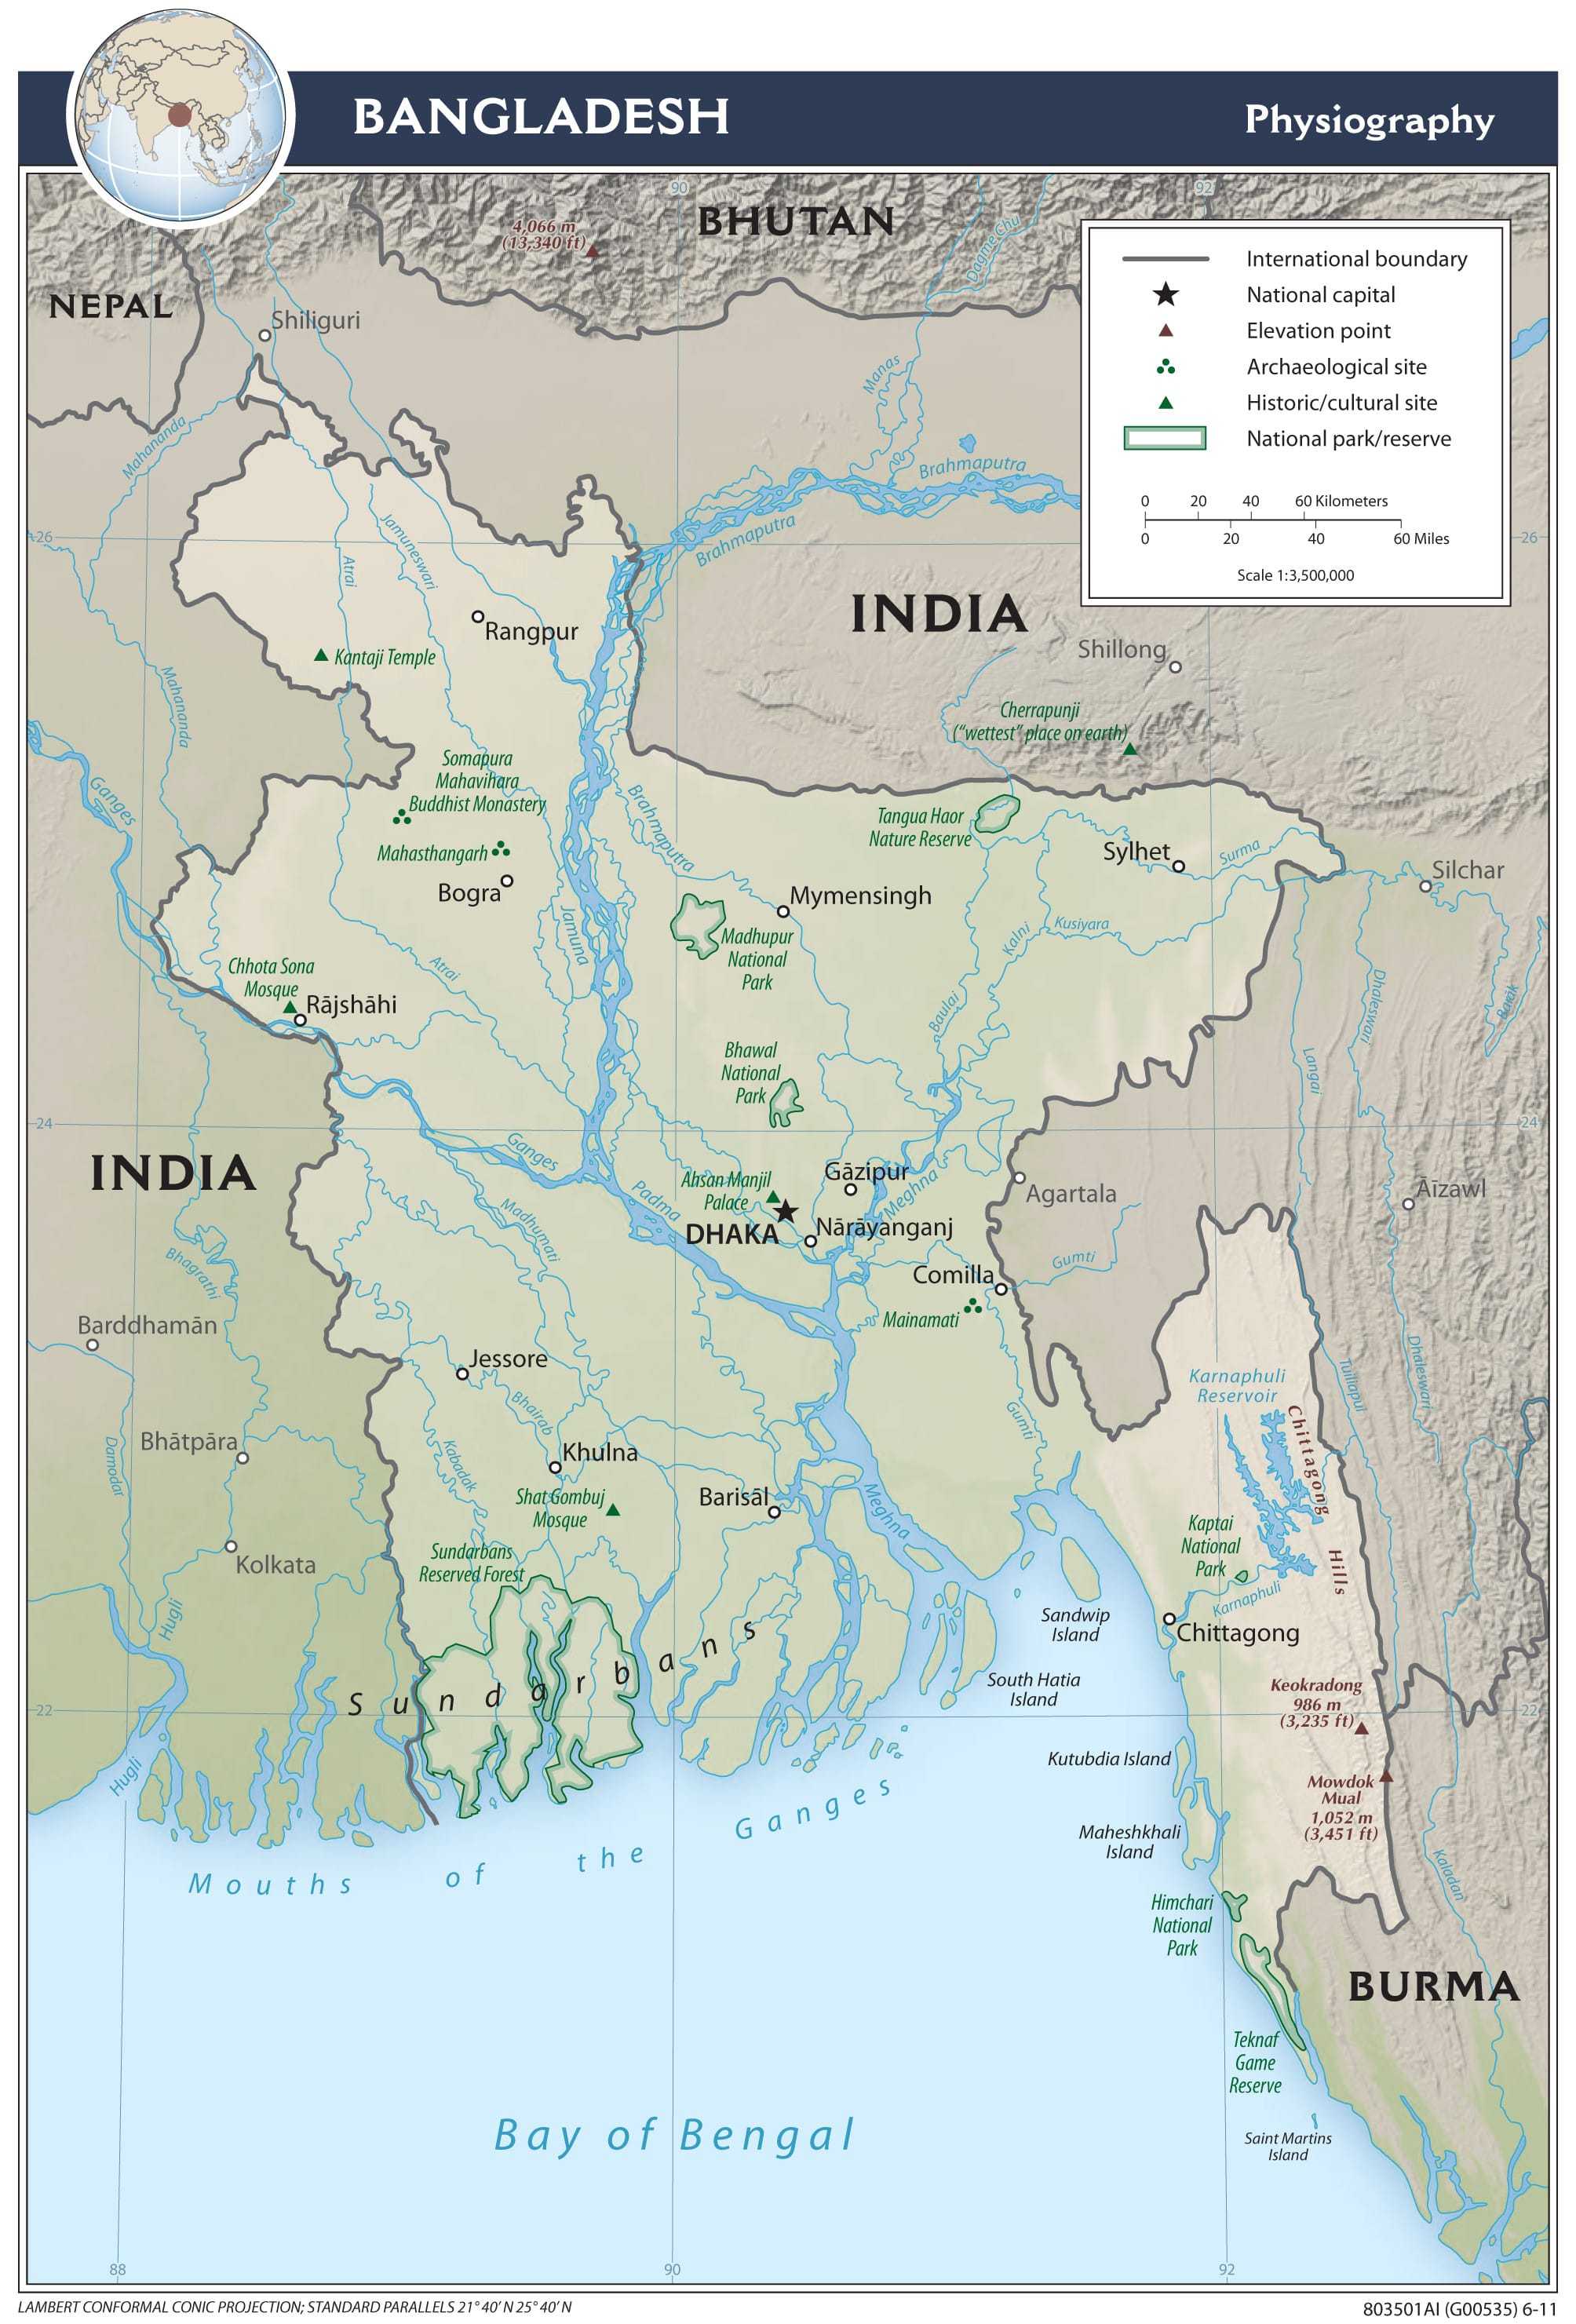 Physiographical map of Bangladesh.